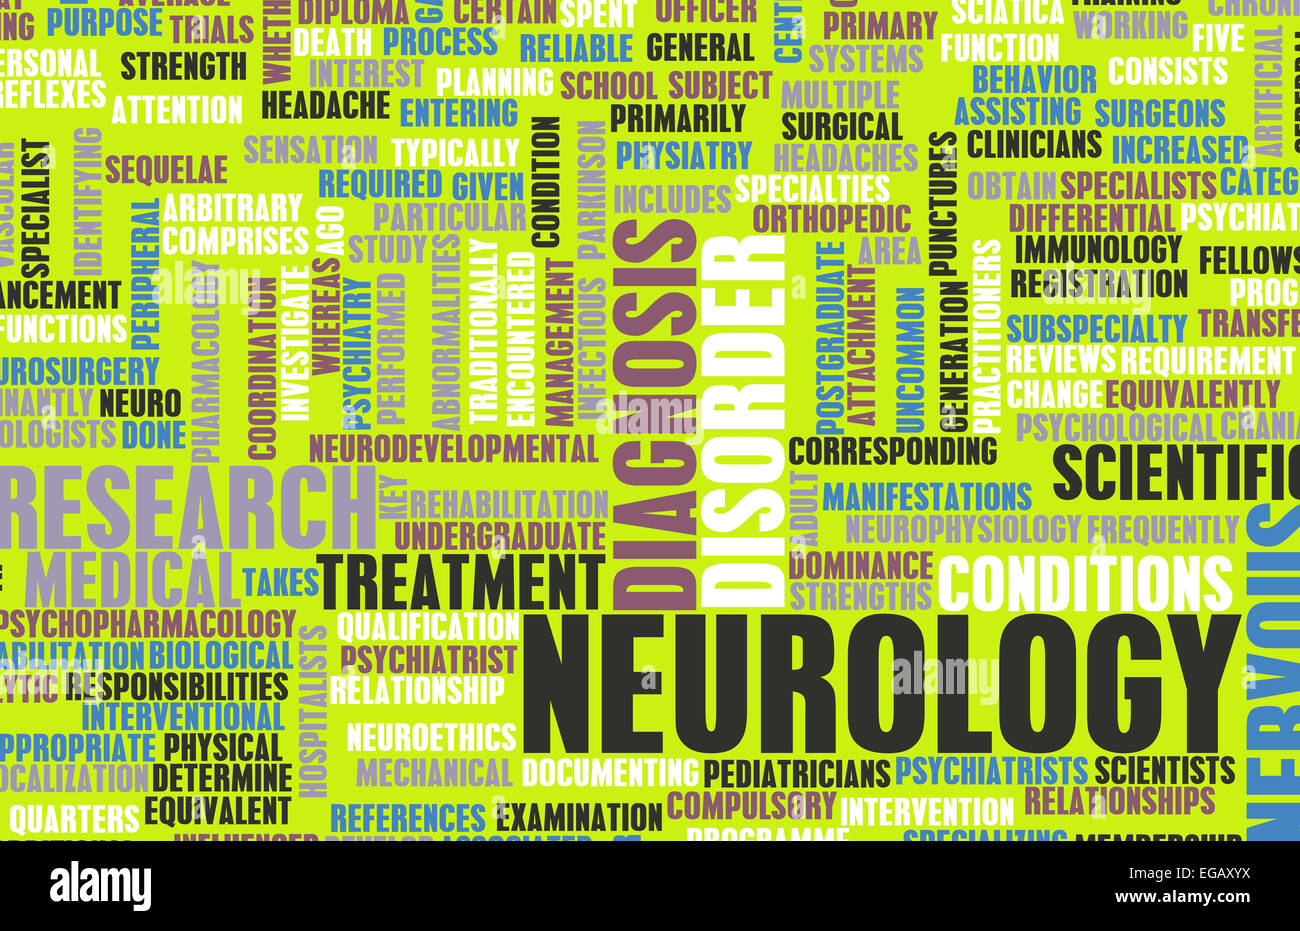 Neurology or Neurologist Medical Field Specialty As Art Stock Photo